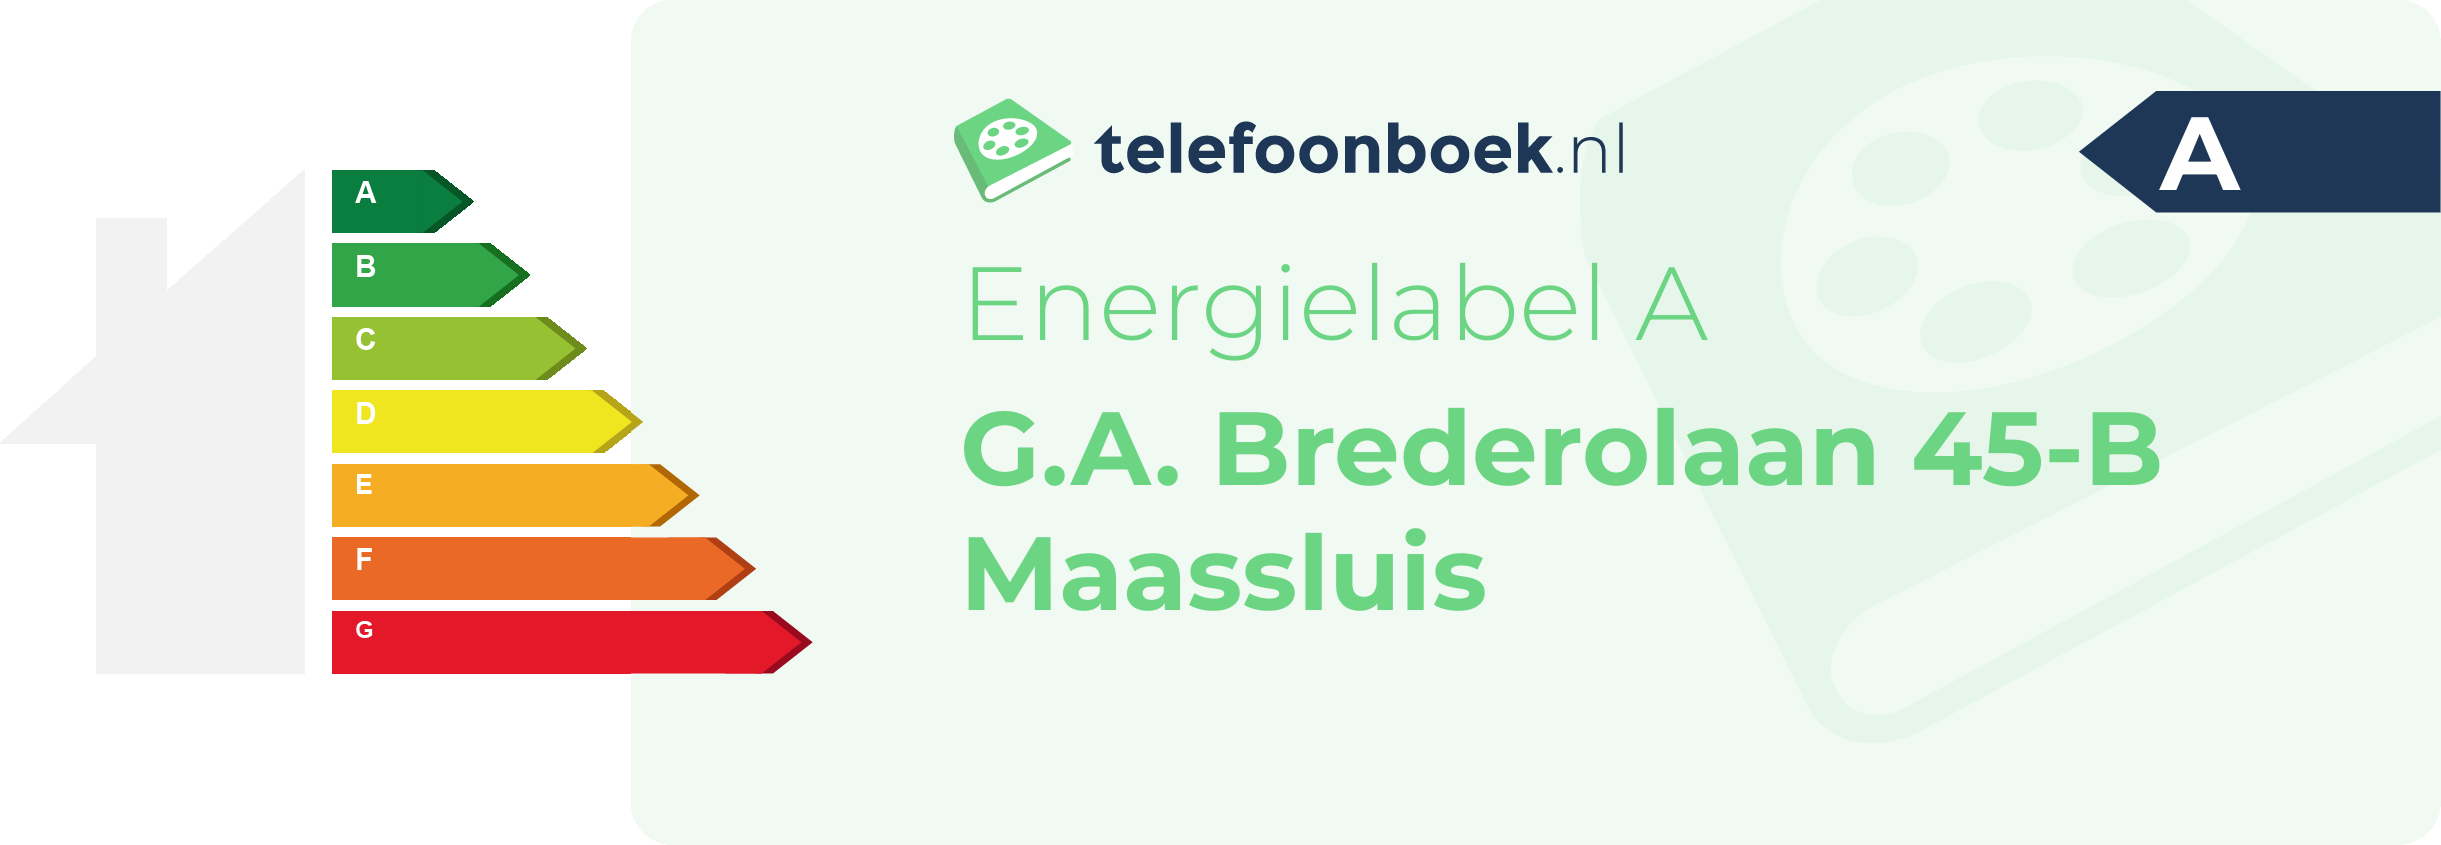 Energielabel G.A. Brederolaan 45-B Maassluis